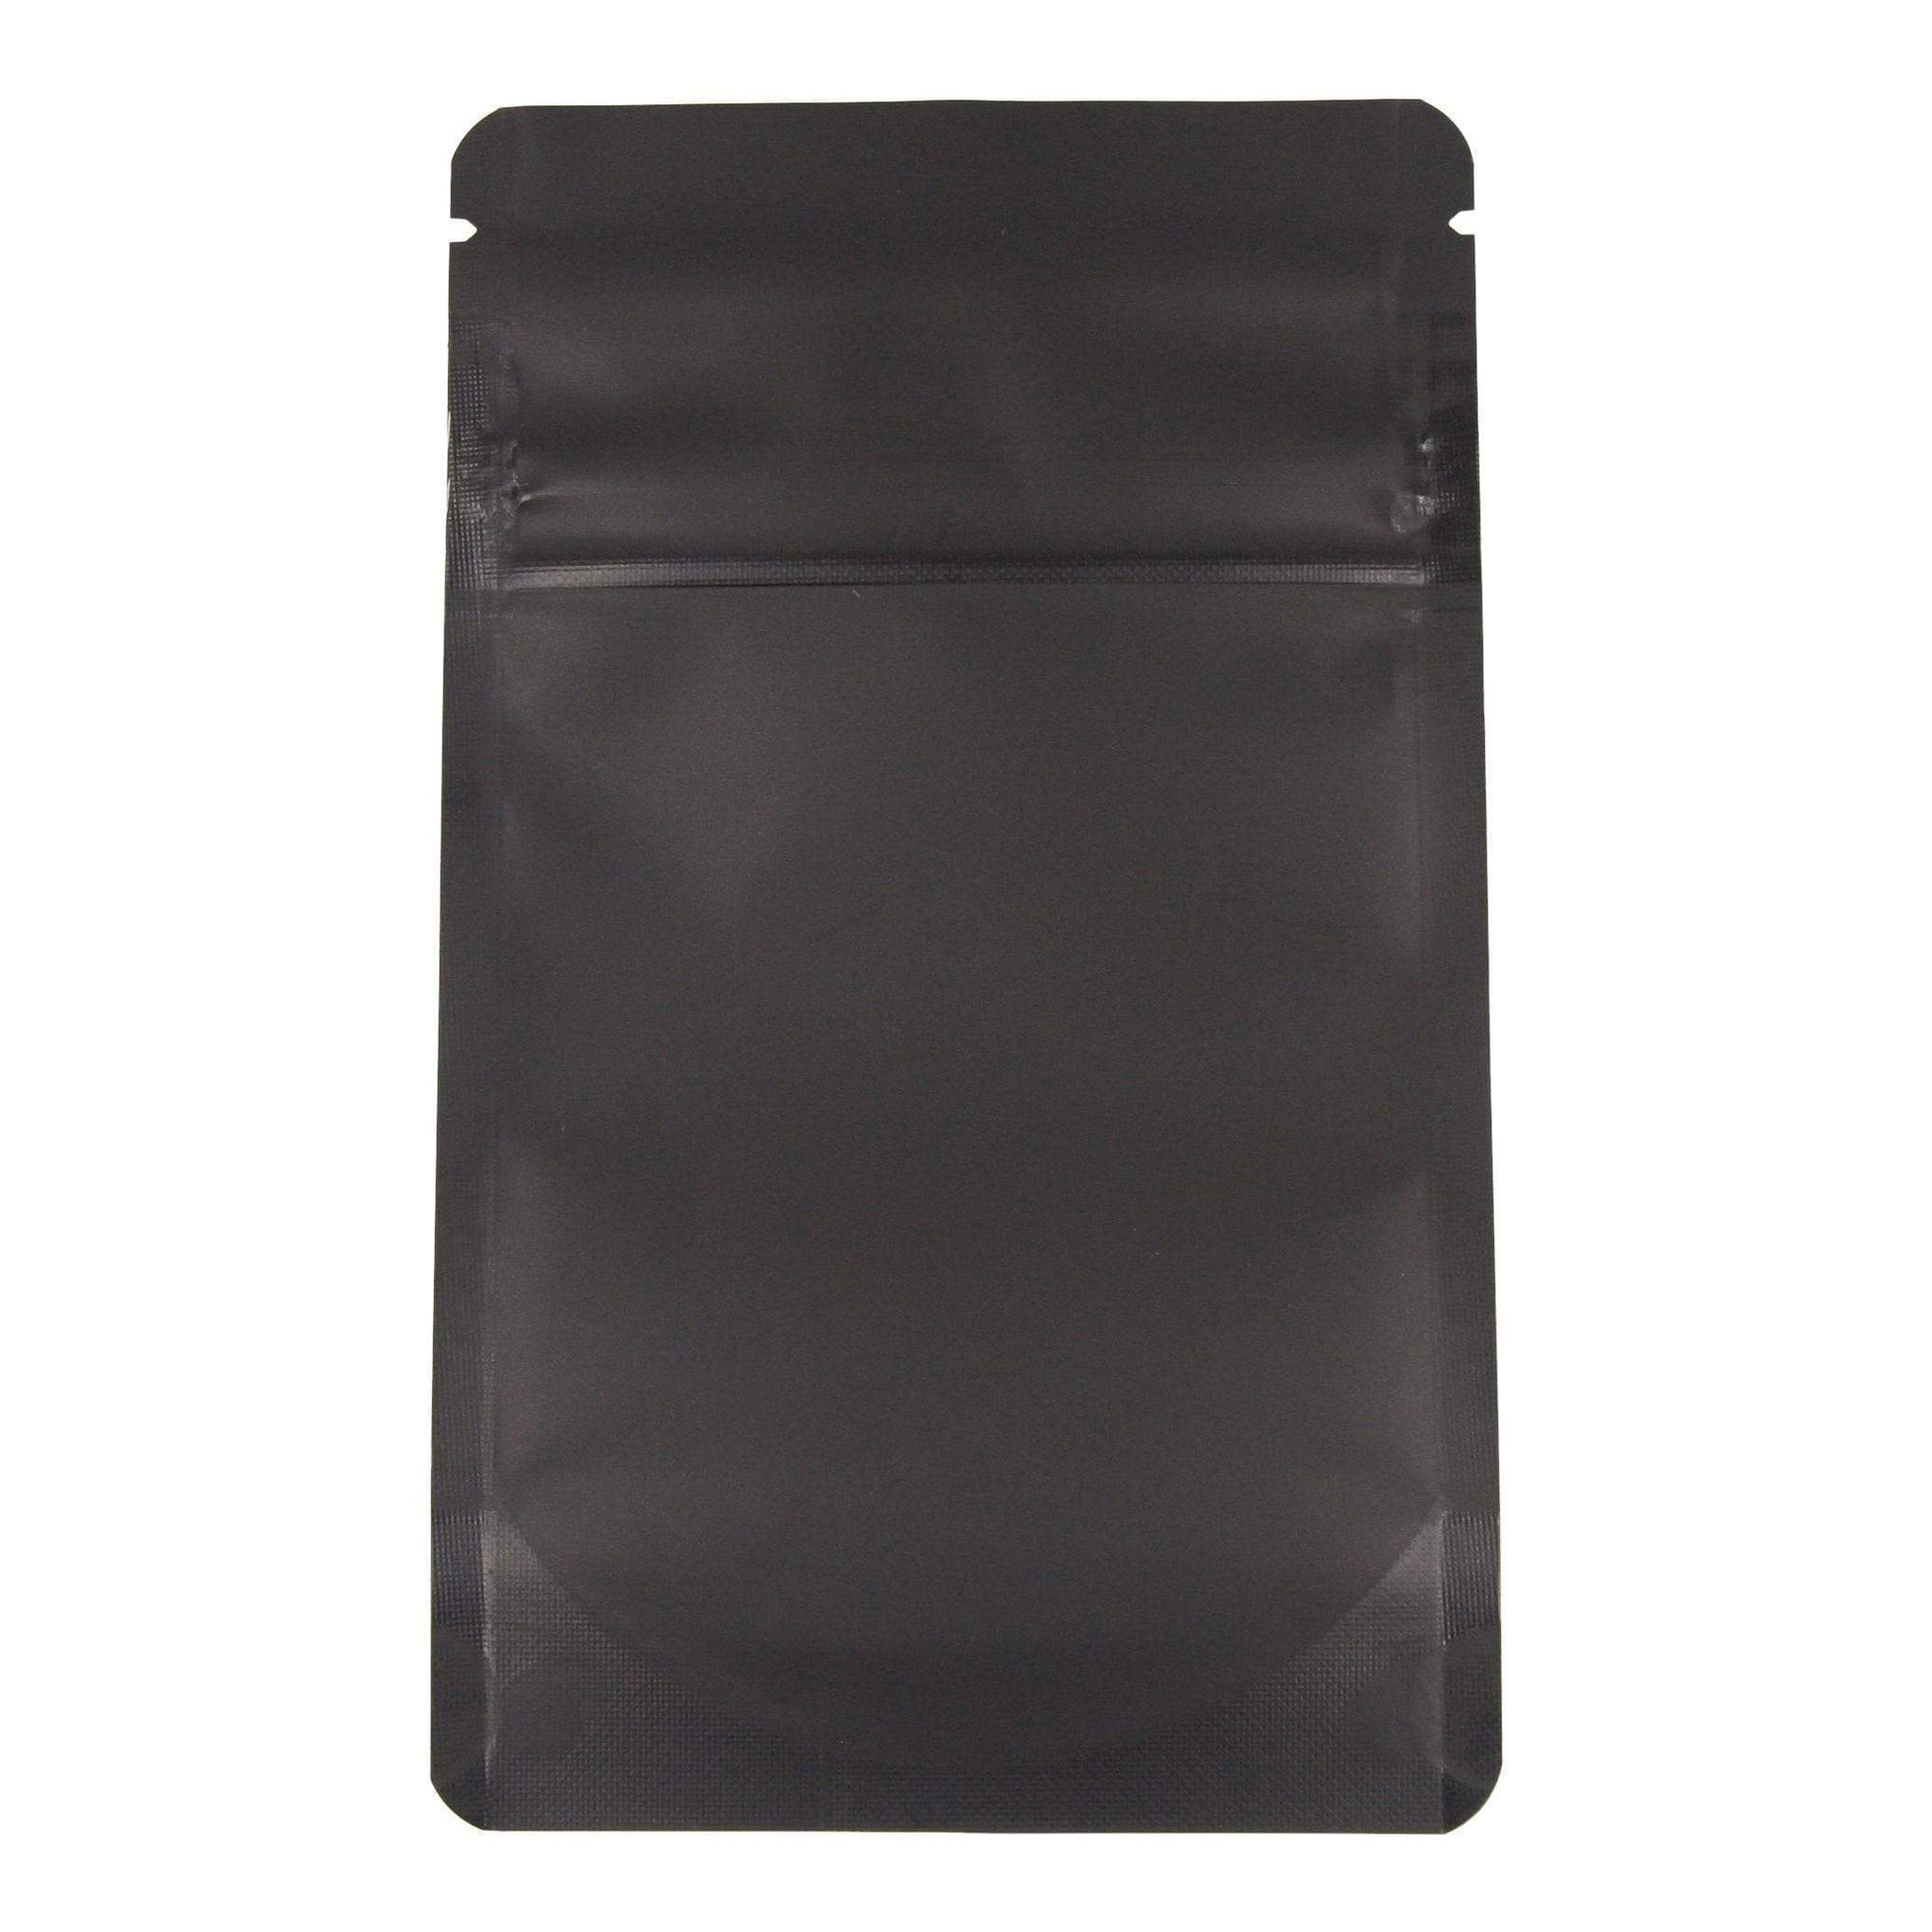 Bag King Child-Resistant Clear Front Green Zipper Bag(1/8th oz) Matte Black